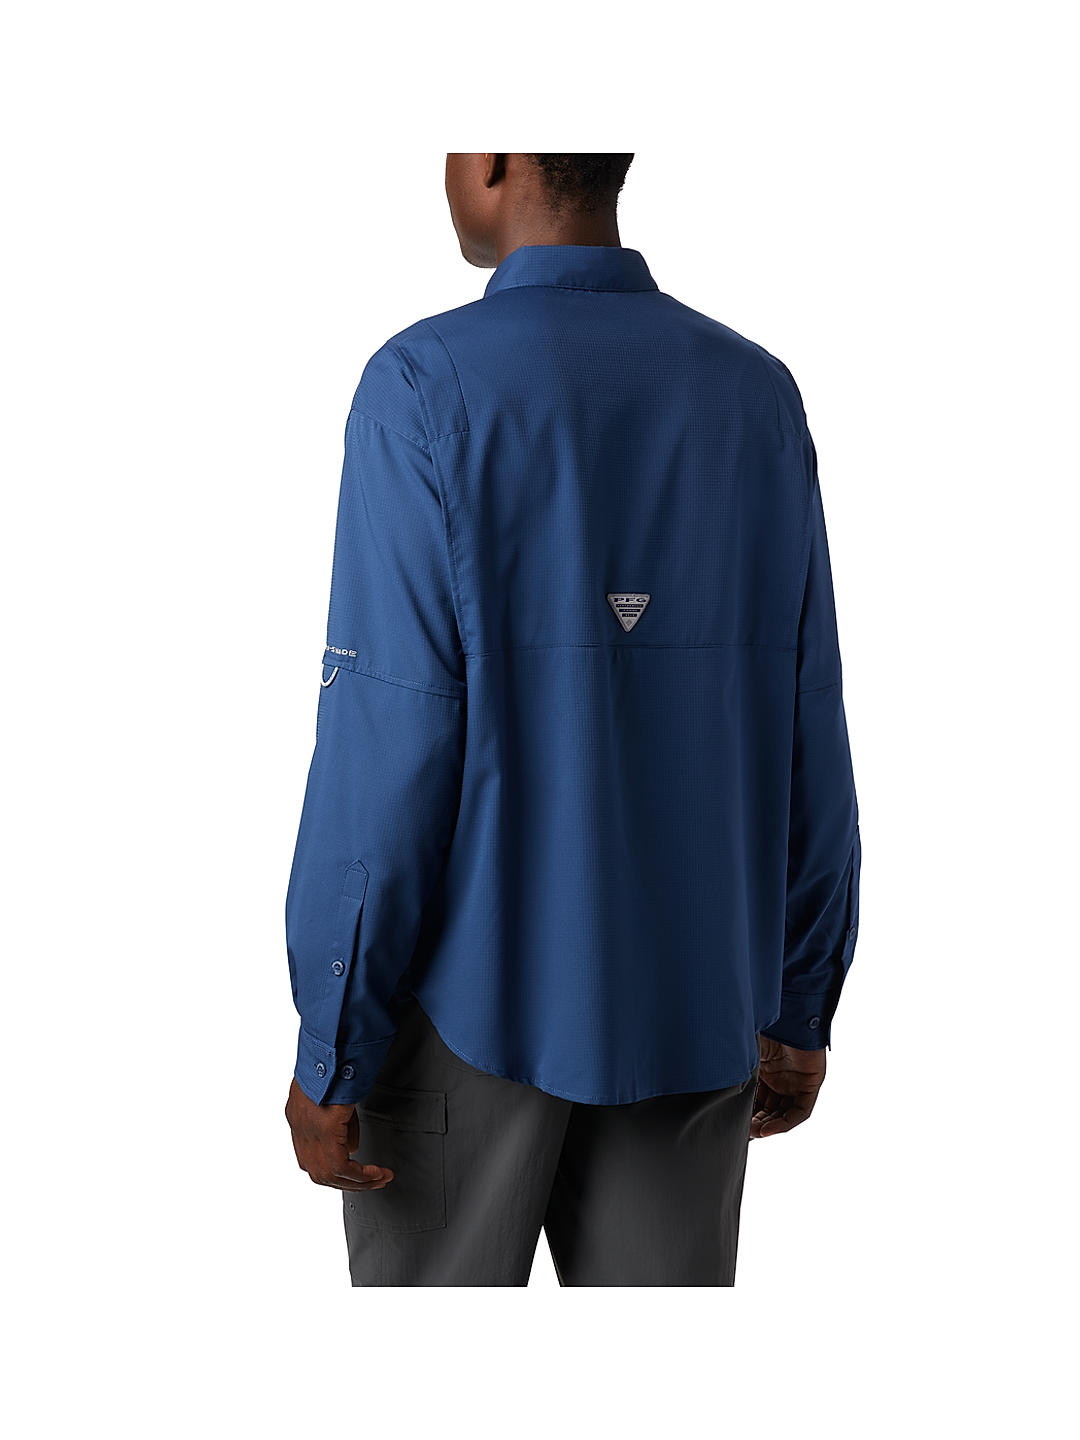 Buy Navy Tamiami II LS Shirt Online at Columbia Sportswear